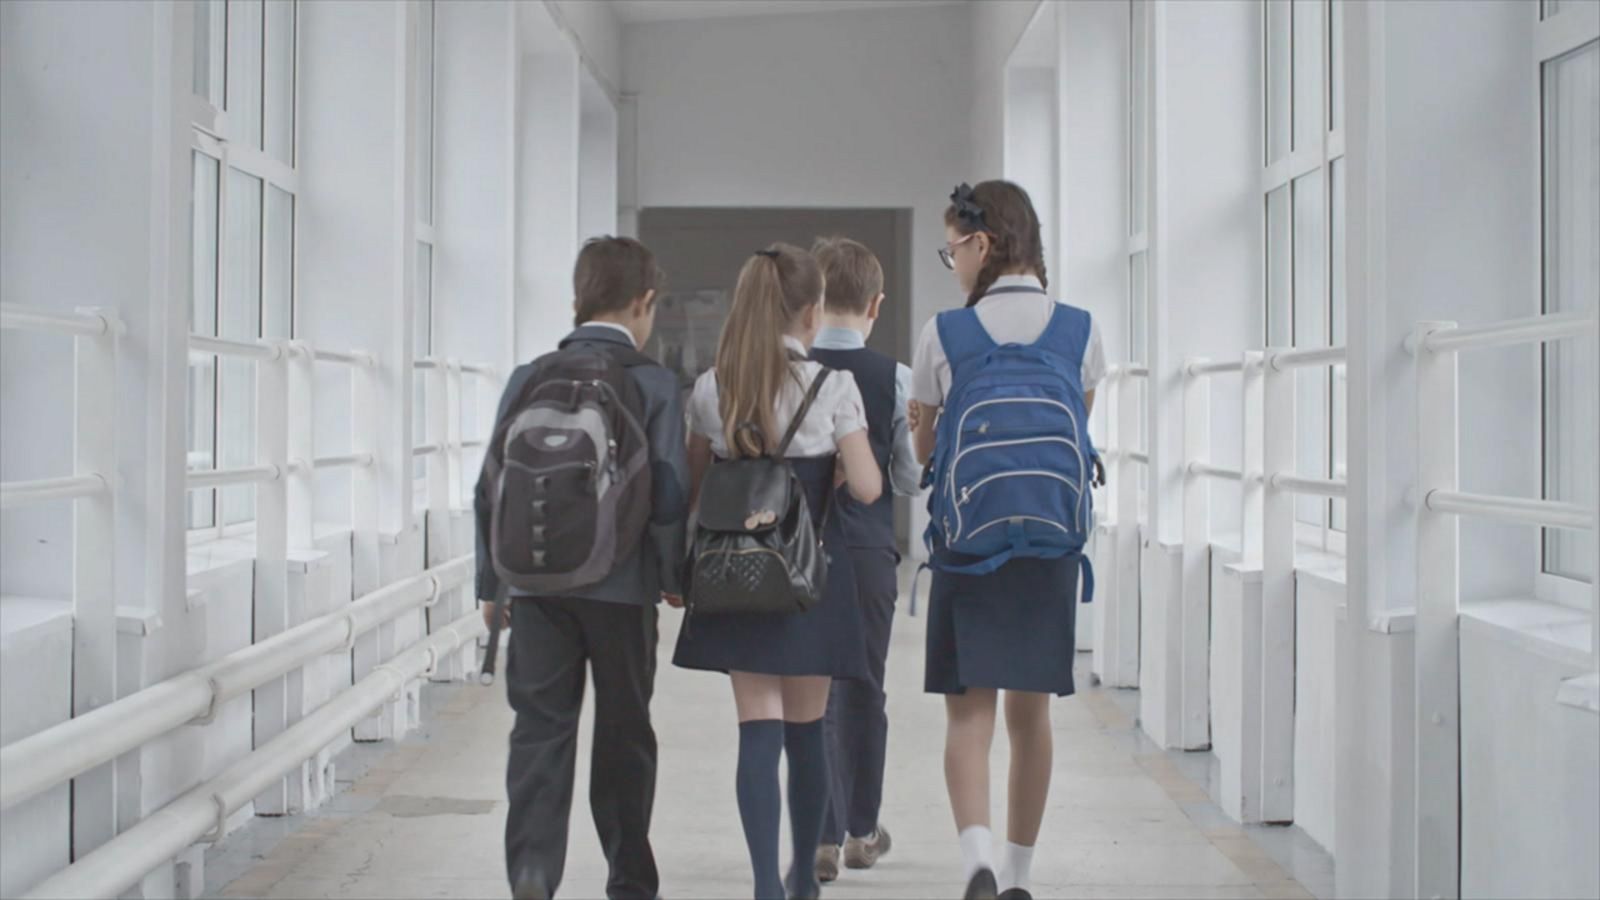 VIDEO: Health warning on harmful chemicals in school uniforms